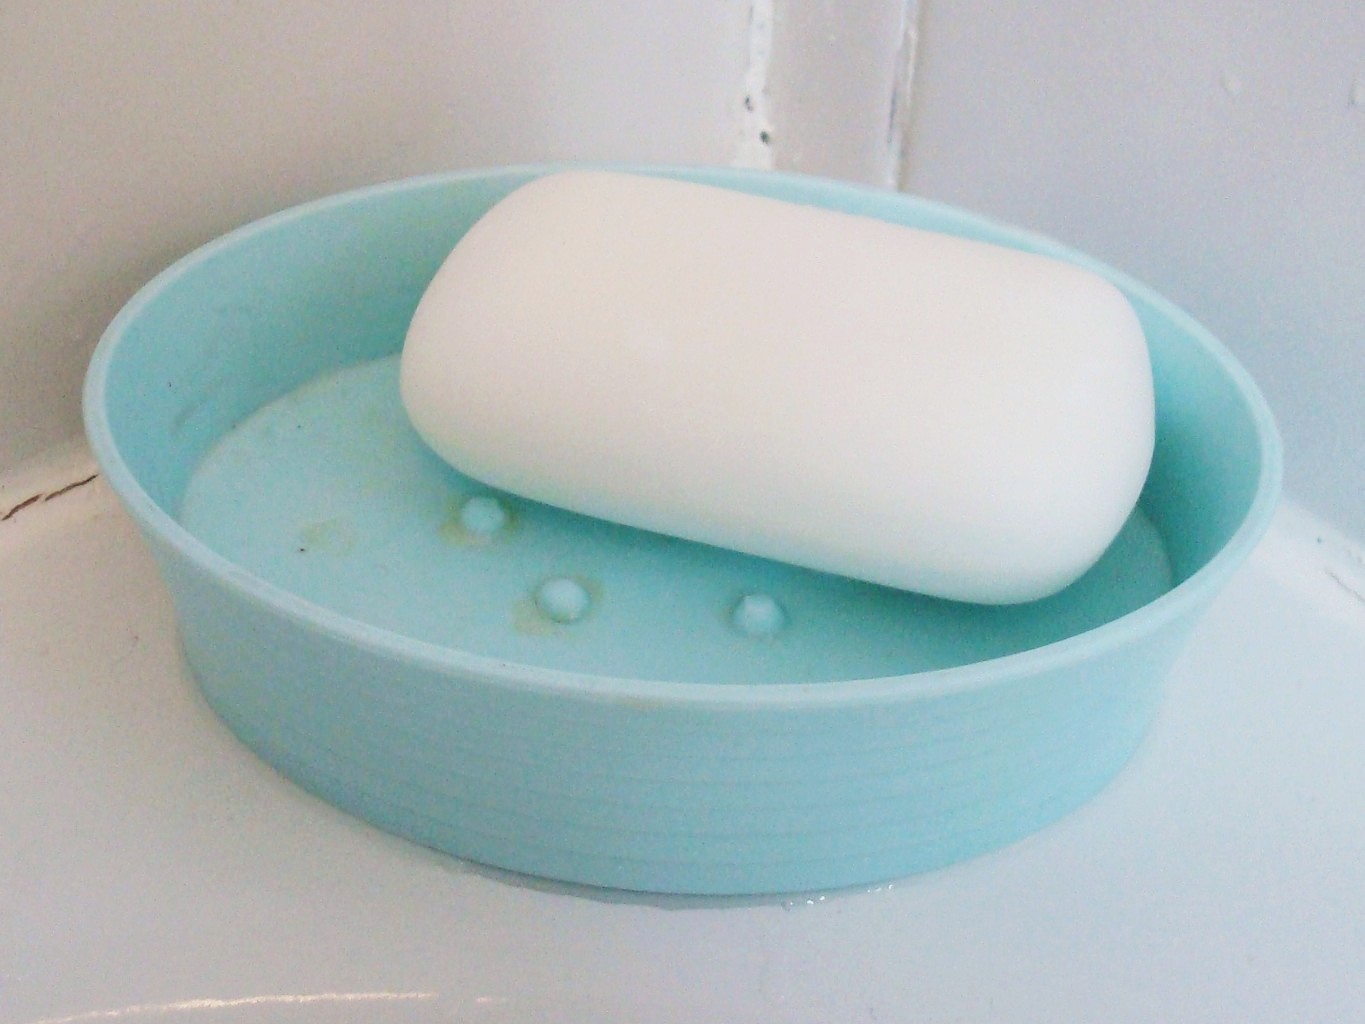 Bathroom Shower Soap Holder Wall Leaf Shape Suction Soap Dish